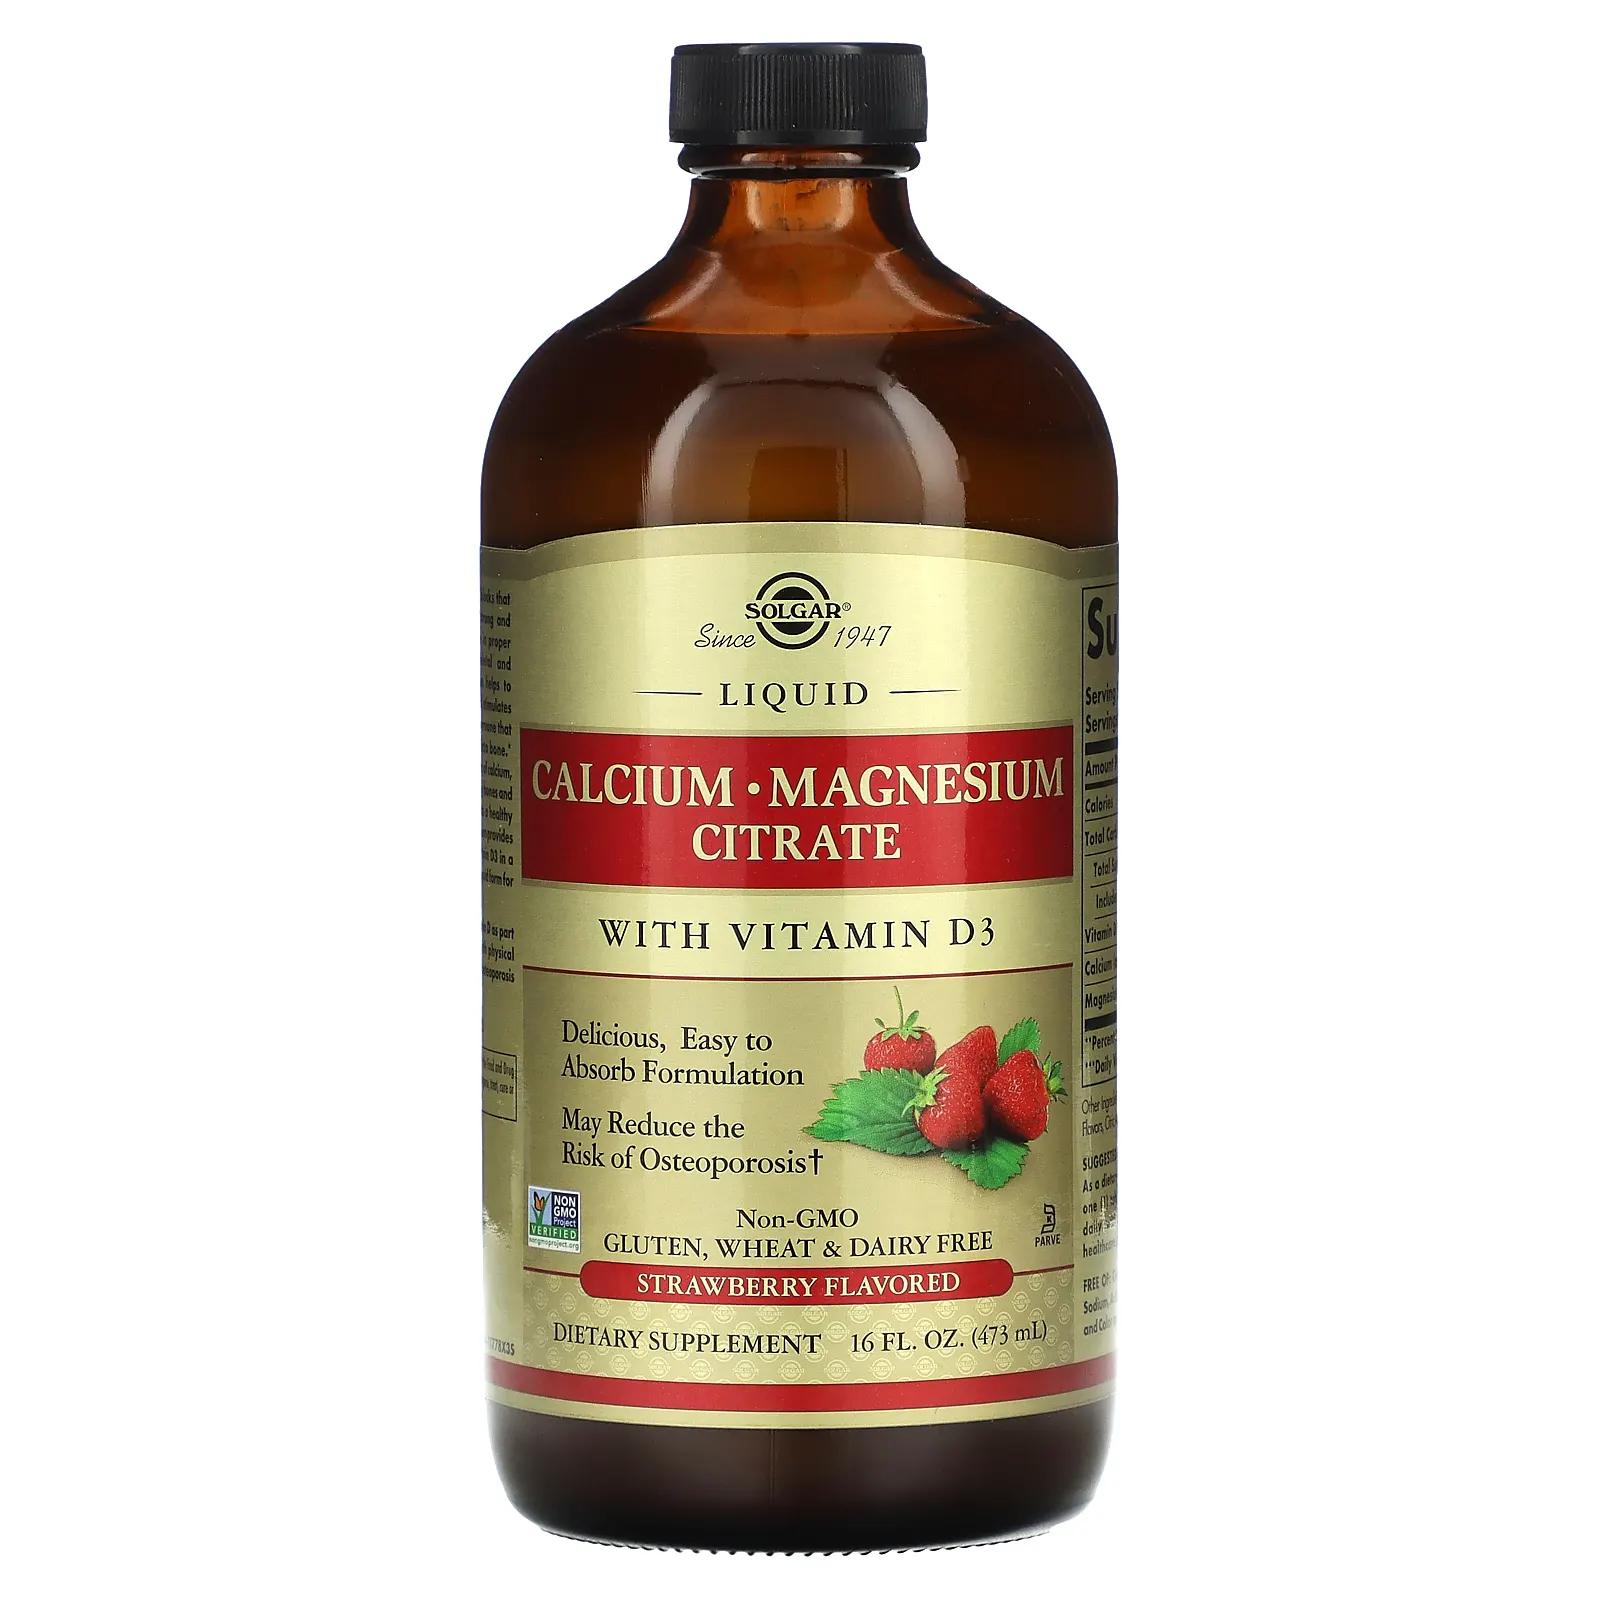 Solgar Liquid Calcium Magnesium Citrate with Vitamin D3 Natural Strawberry 16 fl oz (473 ml) бад для укрепления костей solgar calcium magnesium with vitamin d3 в таблетках 150 шт